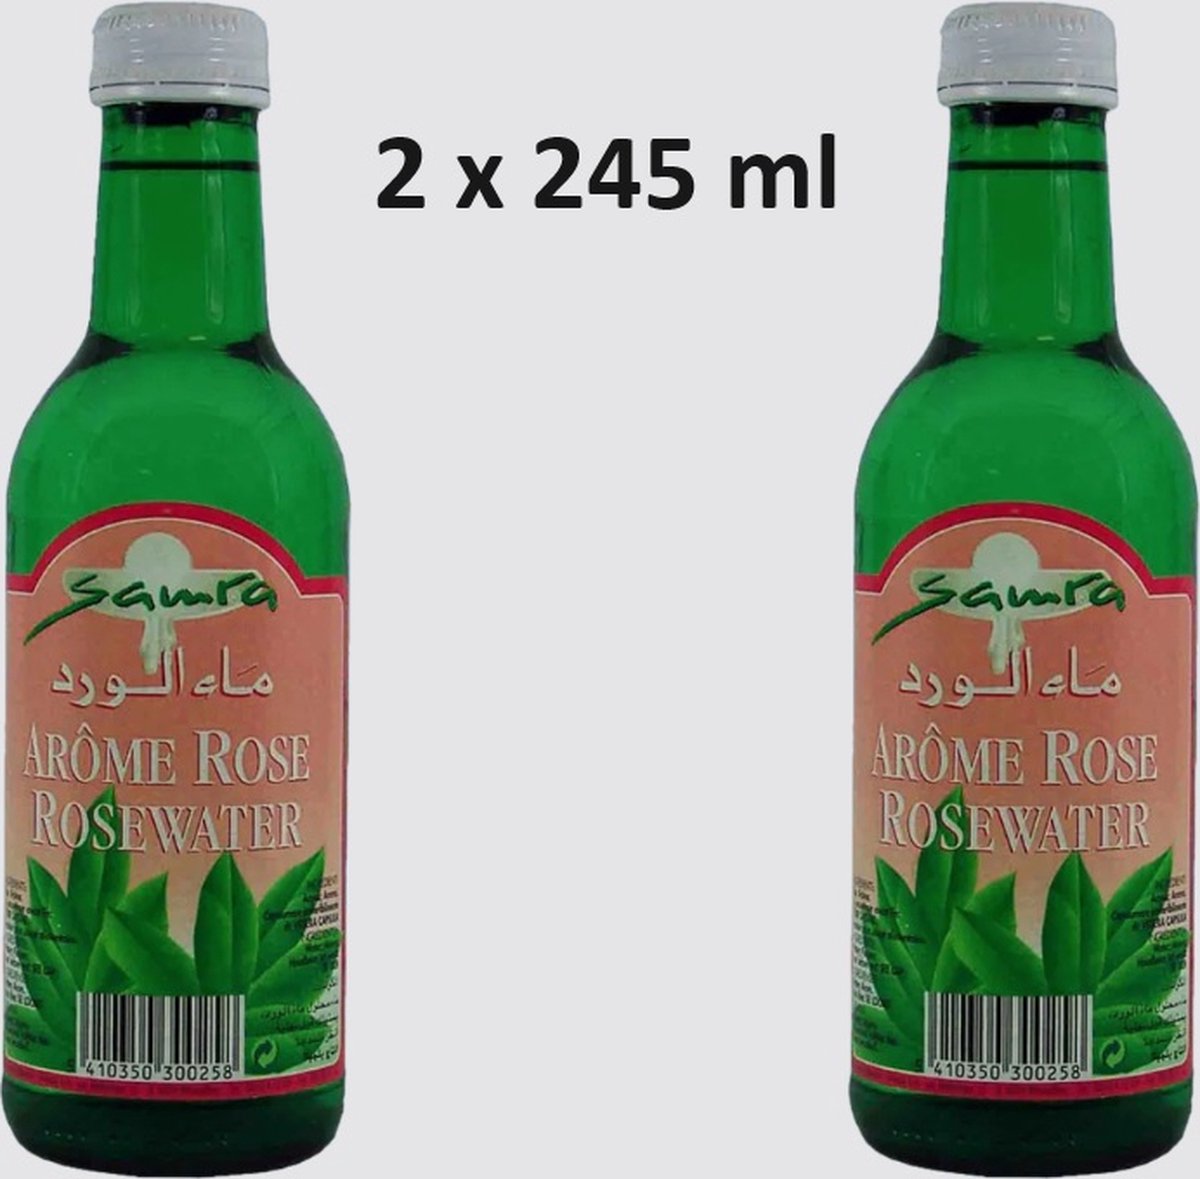 Samra Rozenwater - 2 x 245 ml Voordeelverpakking - Rosewater - Arôme Rose - Rozen hydrolaat - Rozenaroma